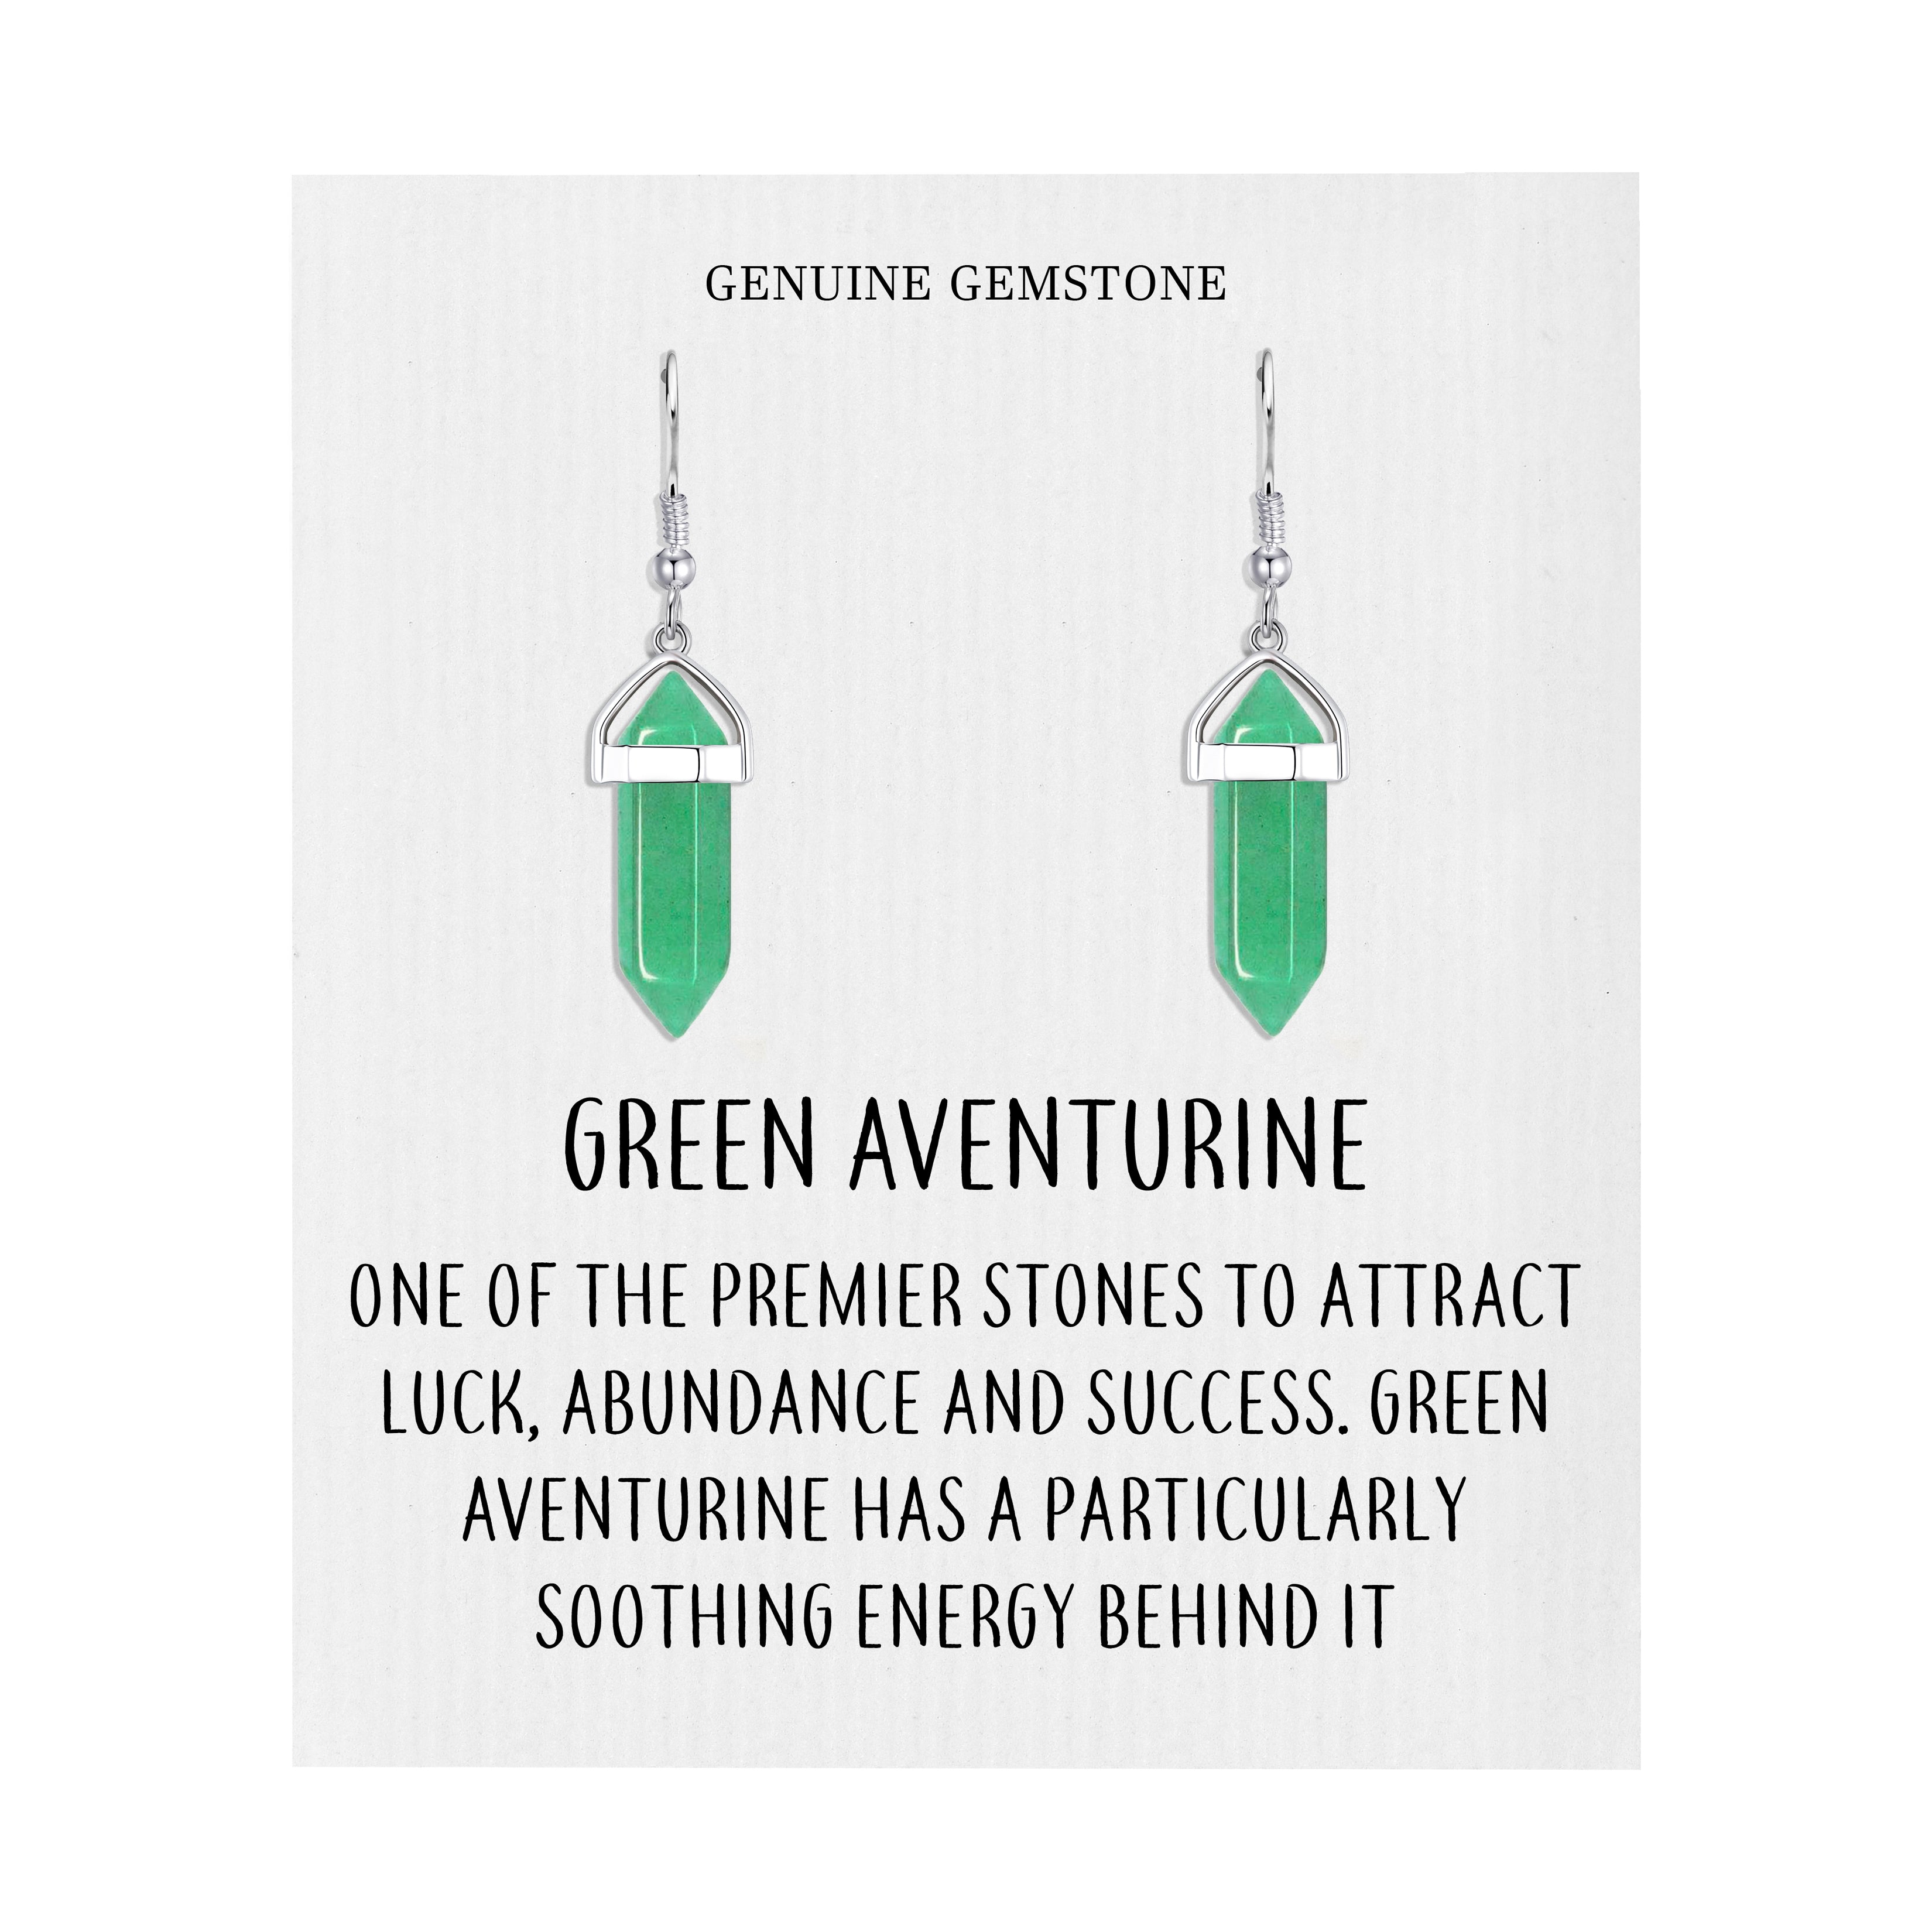 Green Aventurine Gemstone Drop Earrings with Quote Card by Philip Jones Jewellery